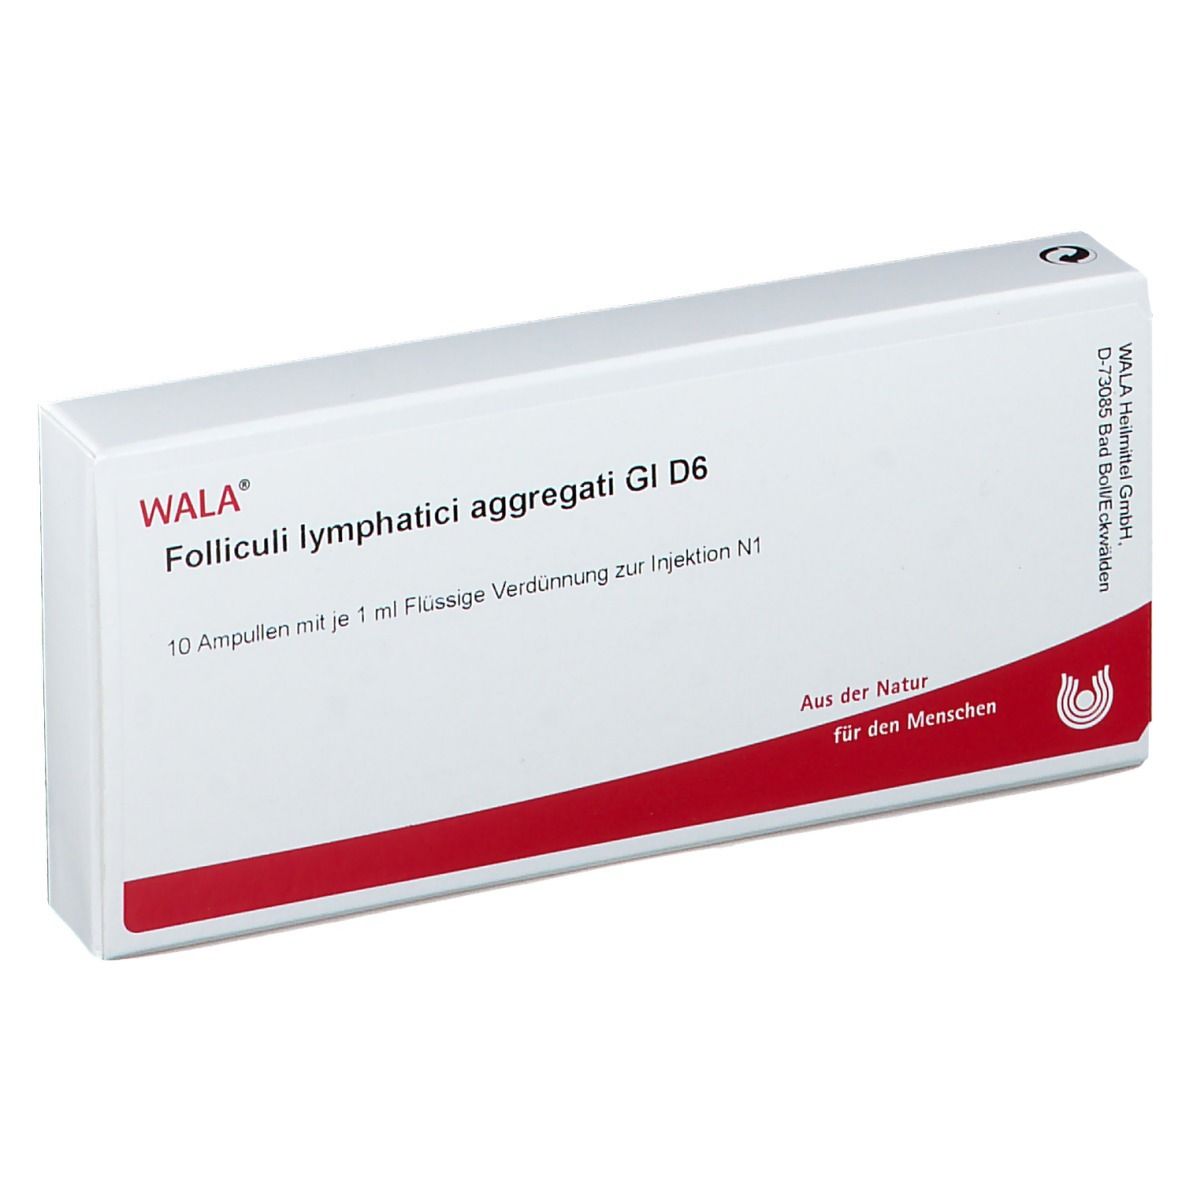 WALA® Folliculi lymphatici aggregati Gl D 6